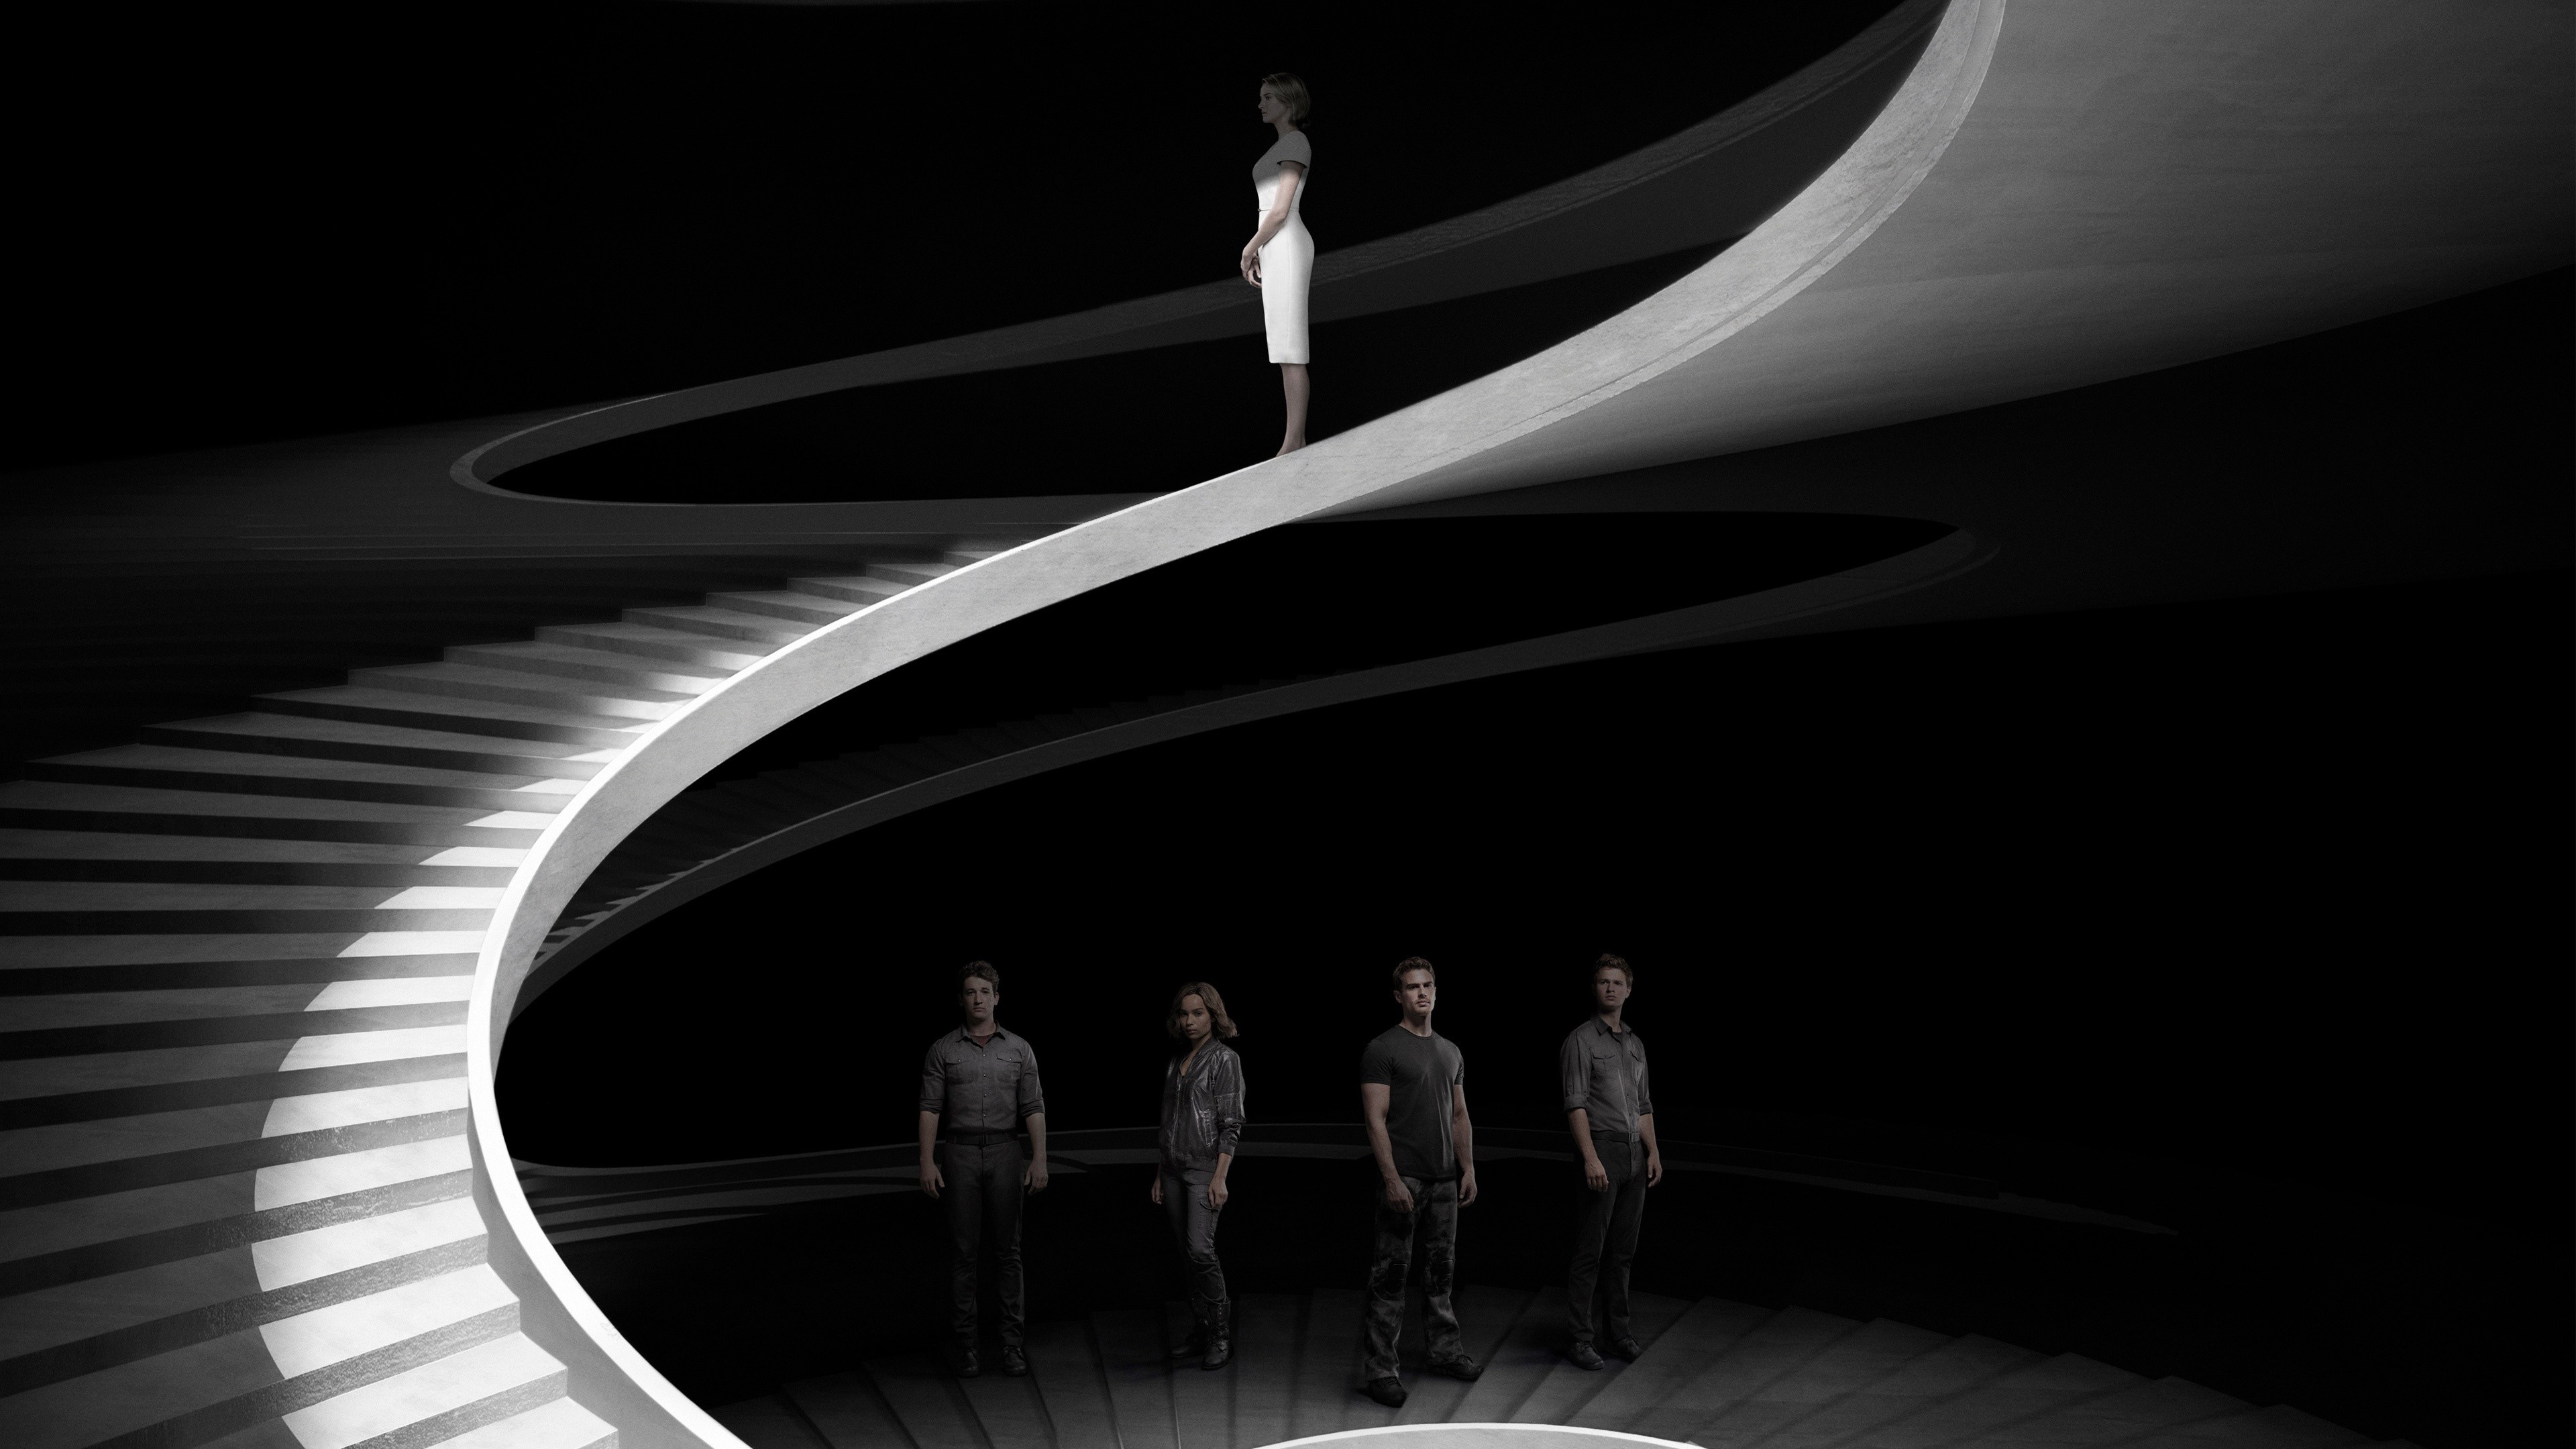 Divergent series, Allegiant movie wallpaper, 3840x2160 4K Desktop